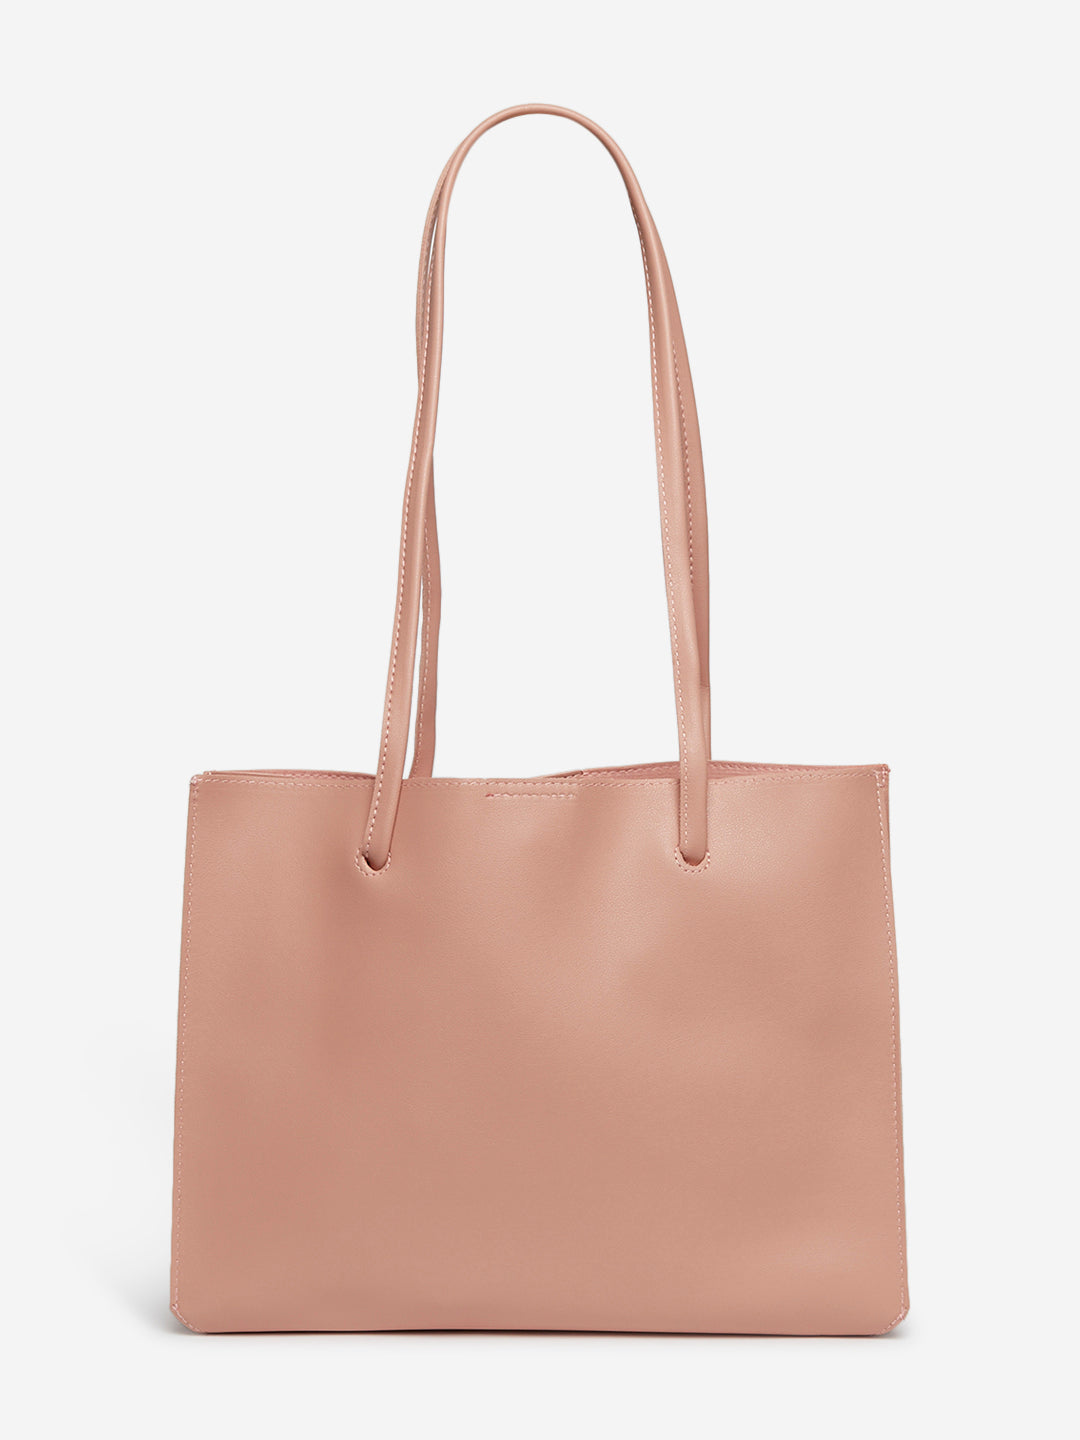 fuchsia pink clutch bag